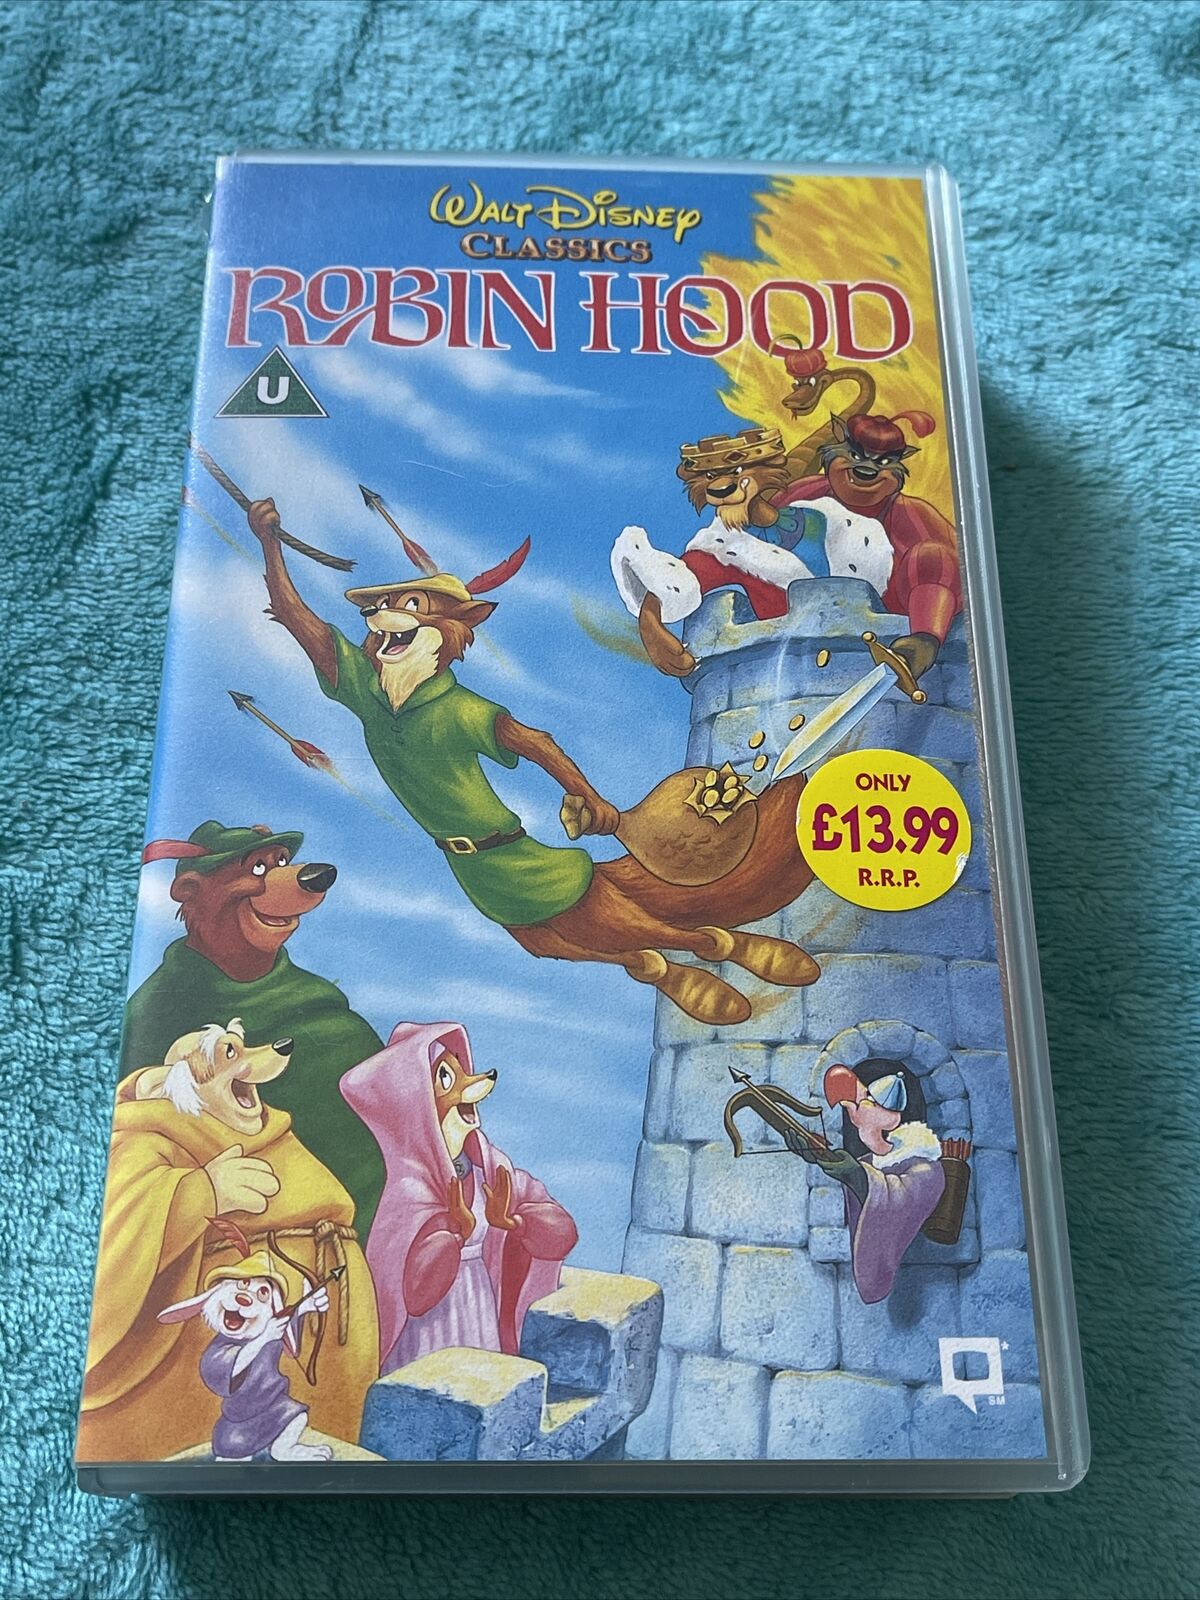 Robin Hood VHS Video Tape Walt Disney Classics 5017182022824 | eBay